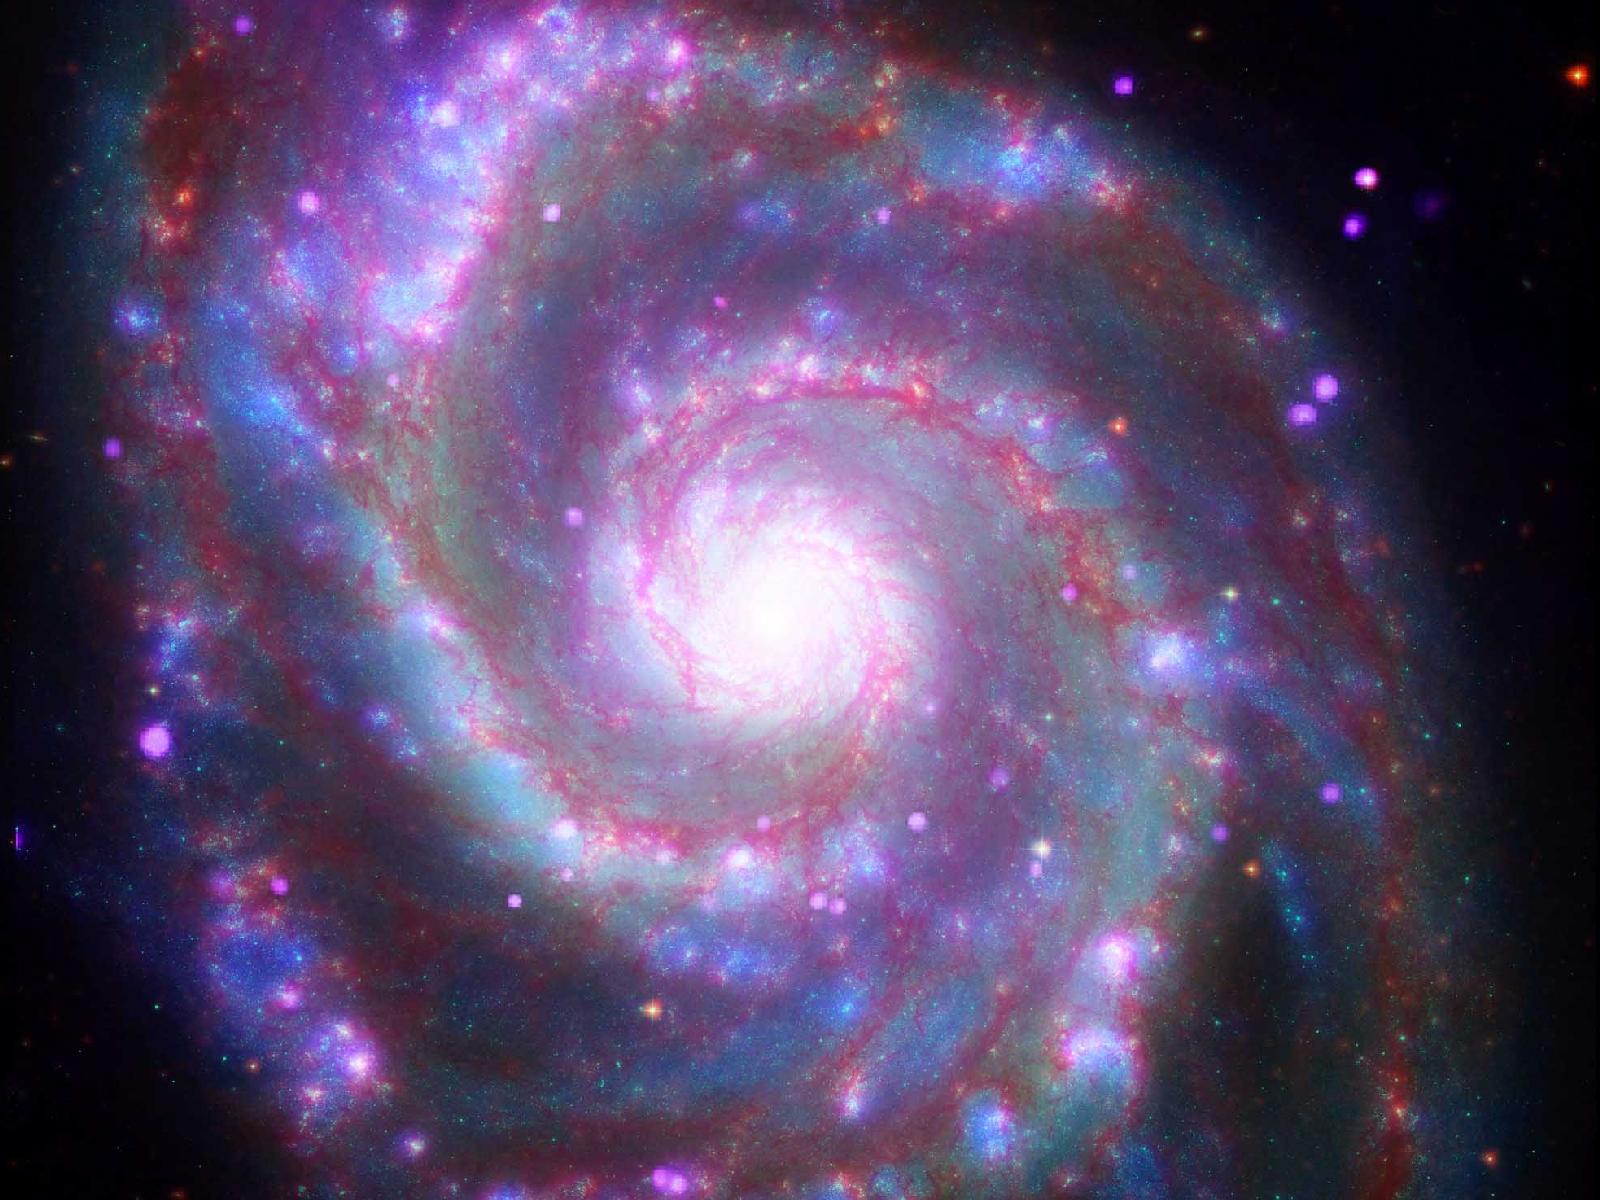 Image Spiral Galaxy Wallpaper Jpg Sporewiki The Spore Wiki Anyone